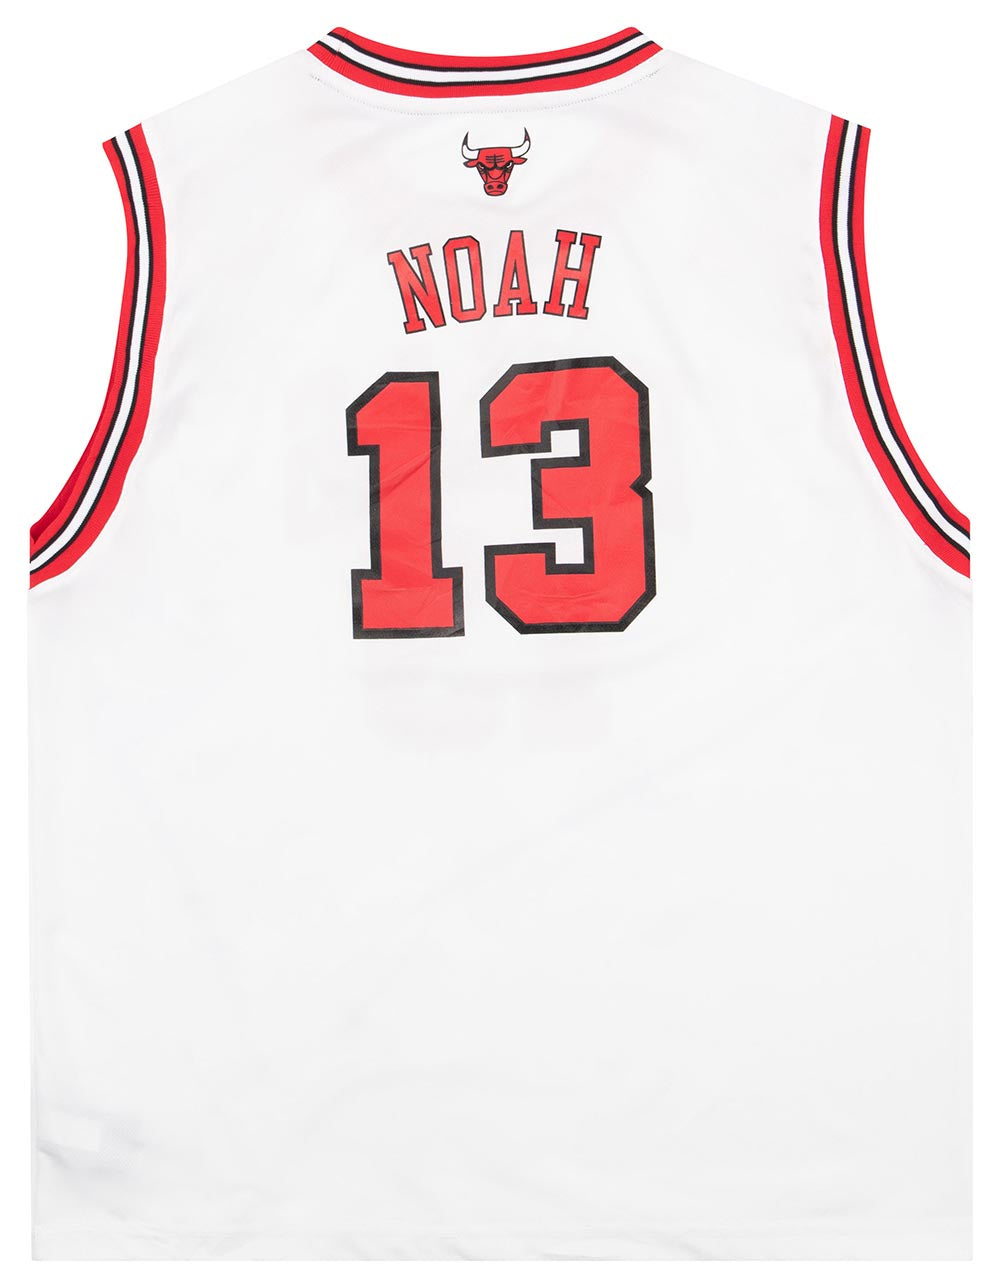 Chicago Bulls #13 Joakim Noah Adidas Size S Basketball jersey